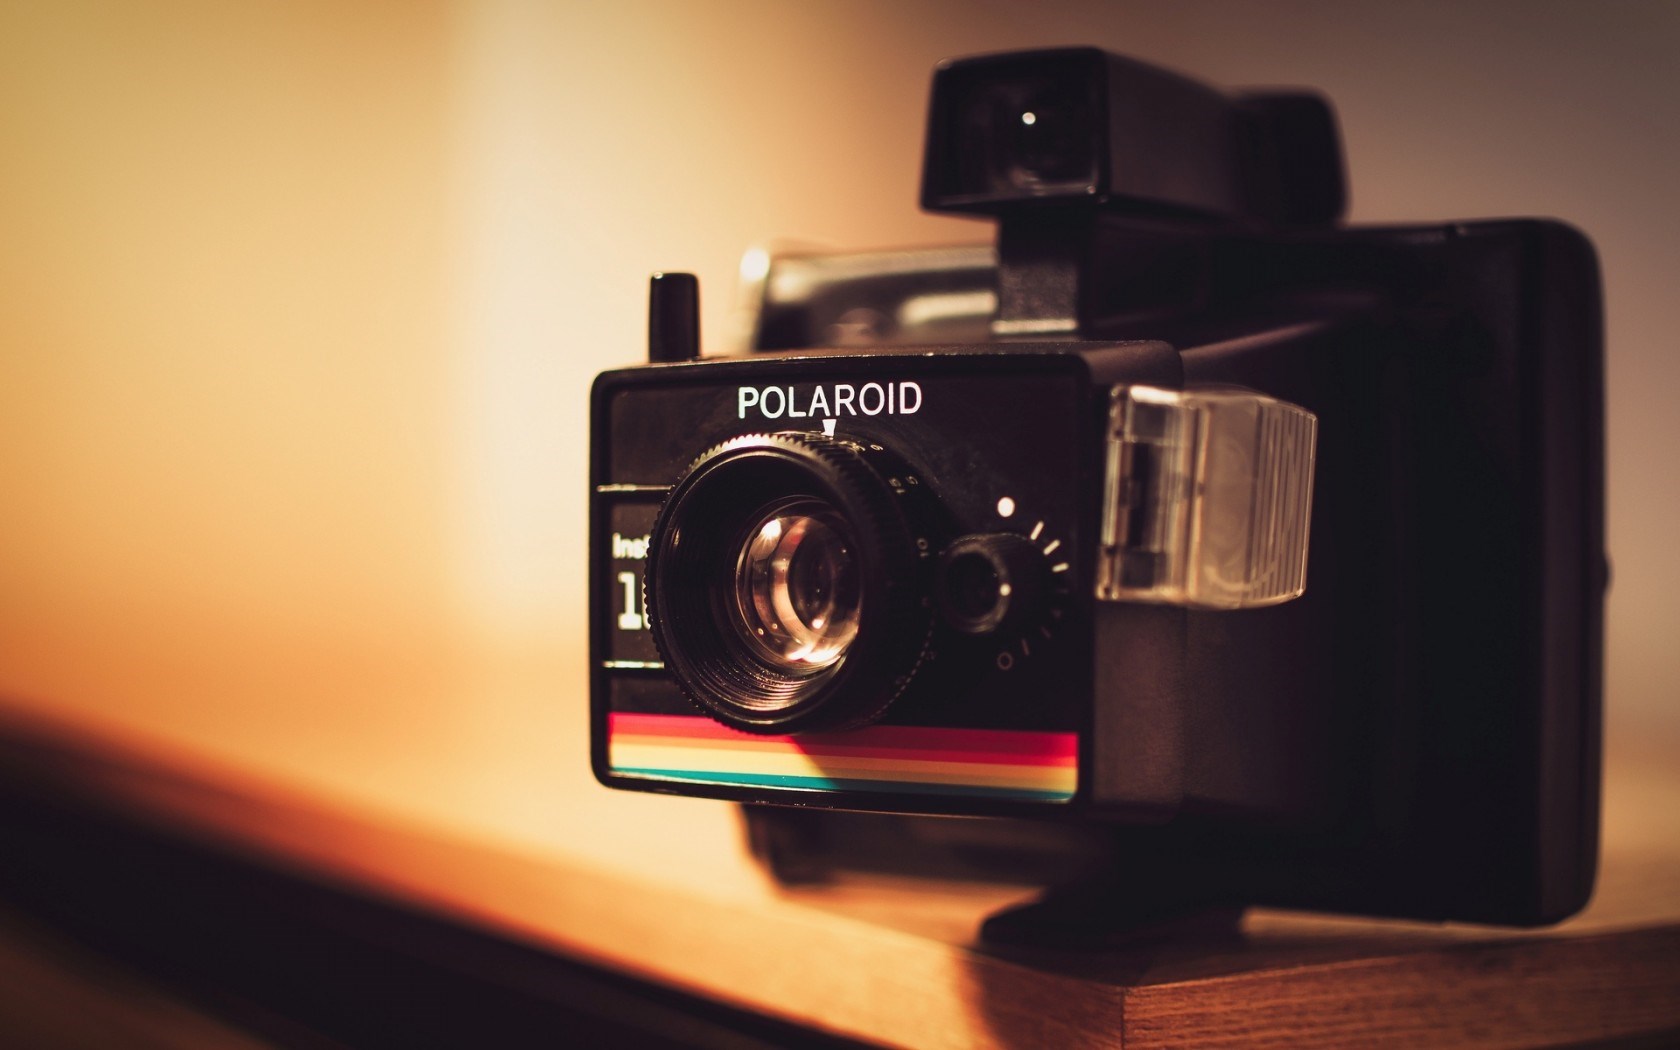 camera classic polaroid hd wallpaper mobile desktop background photo